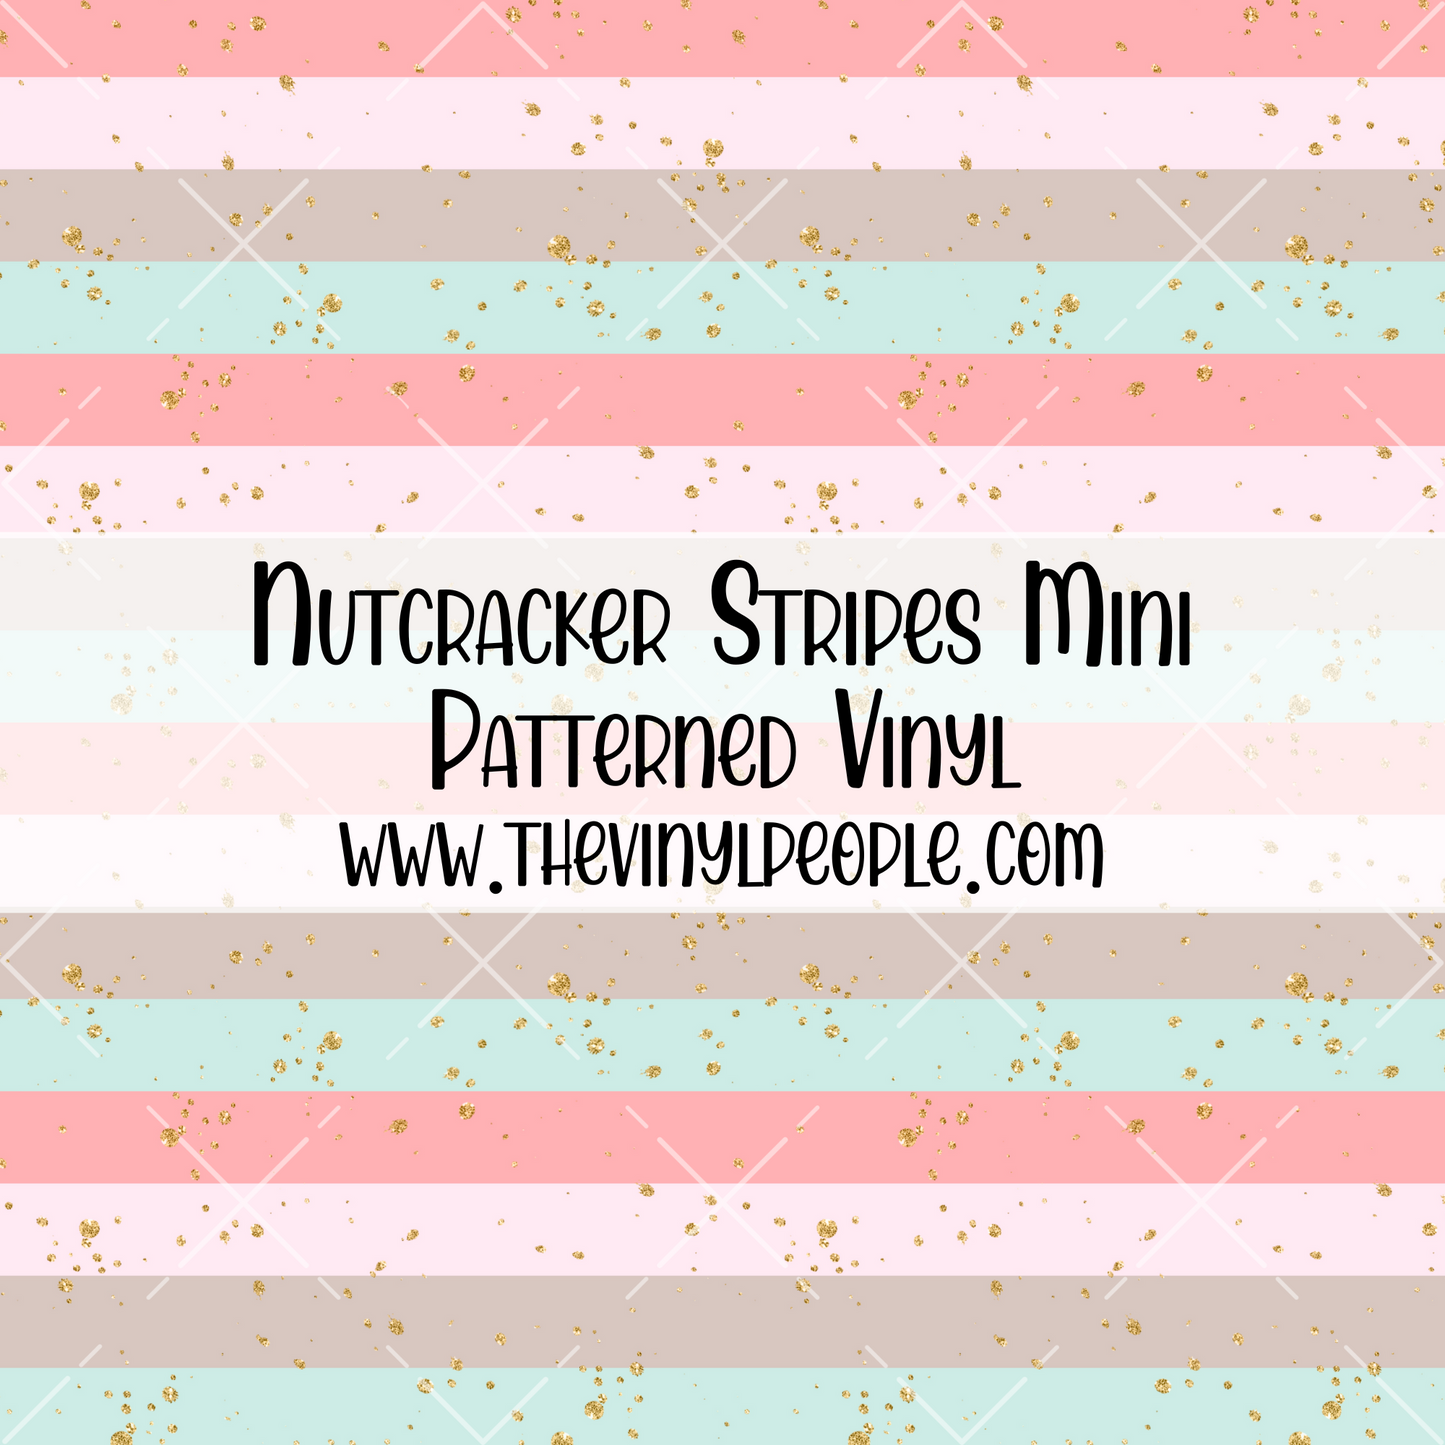 Nutcracker Stripes Patterned Vinyl